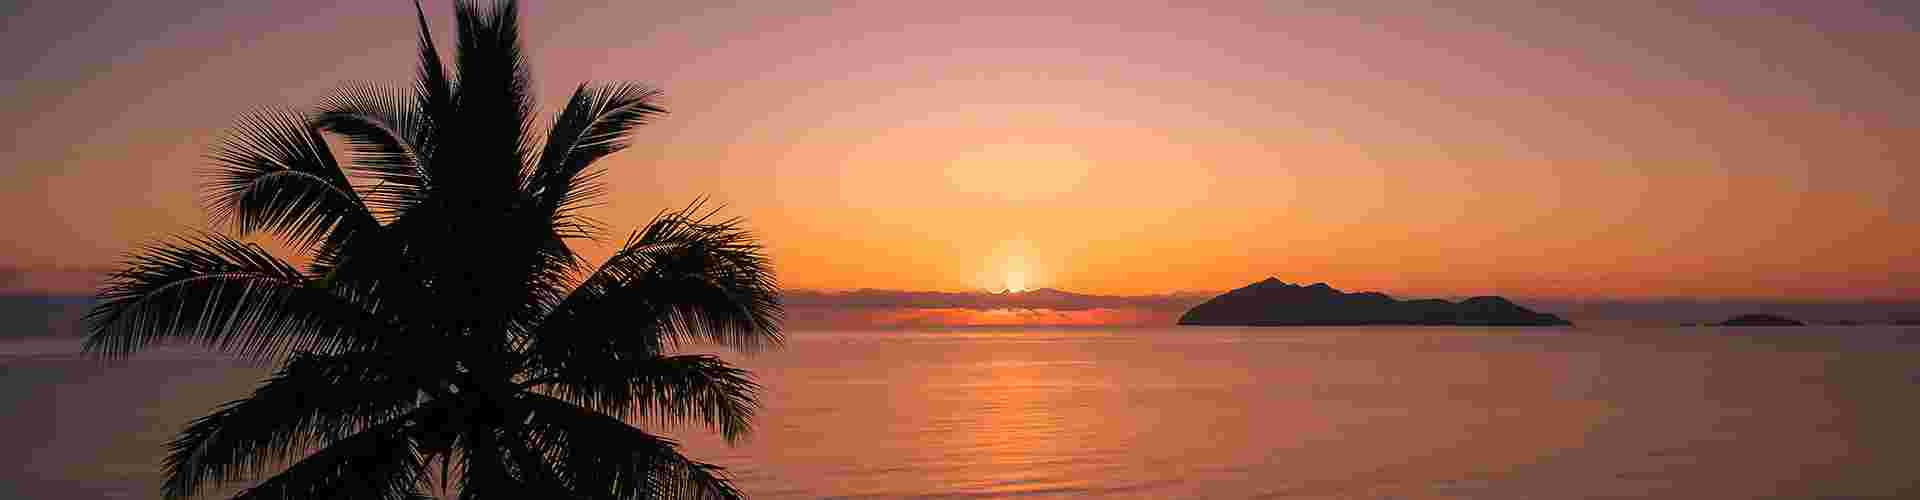 Sunset behind Dunk Island, Mission Beach